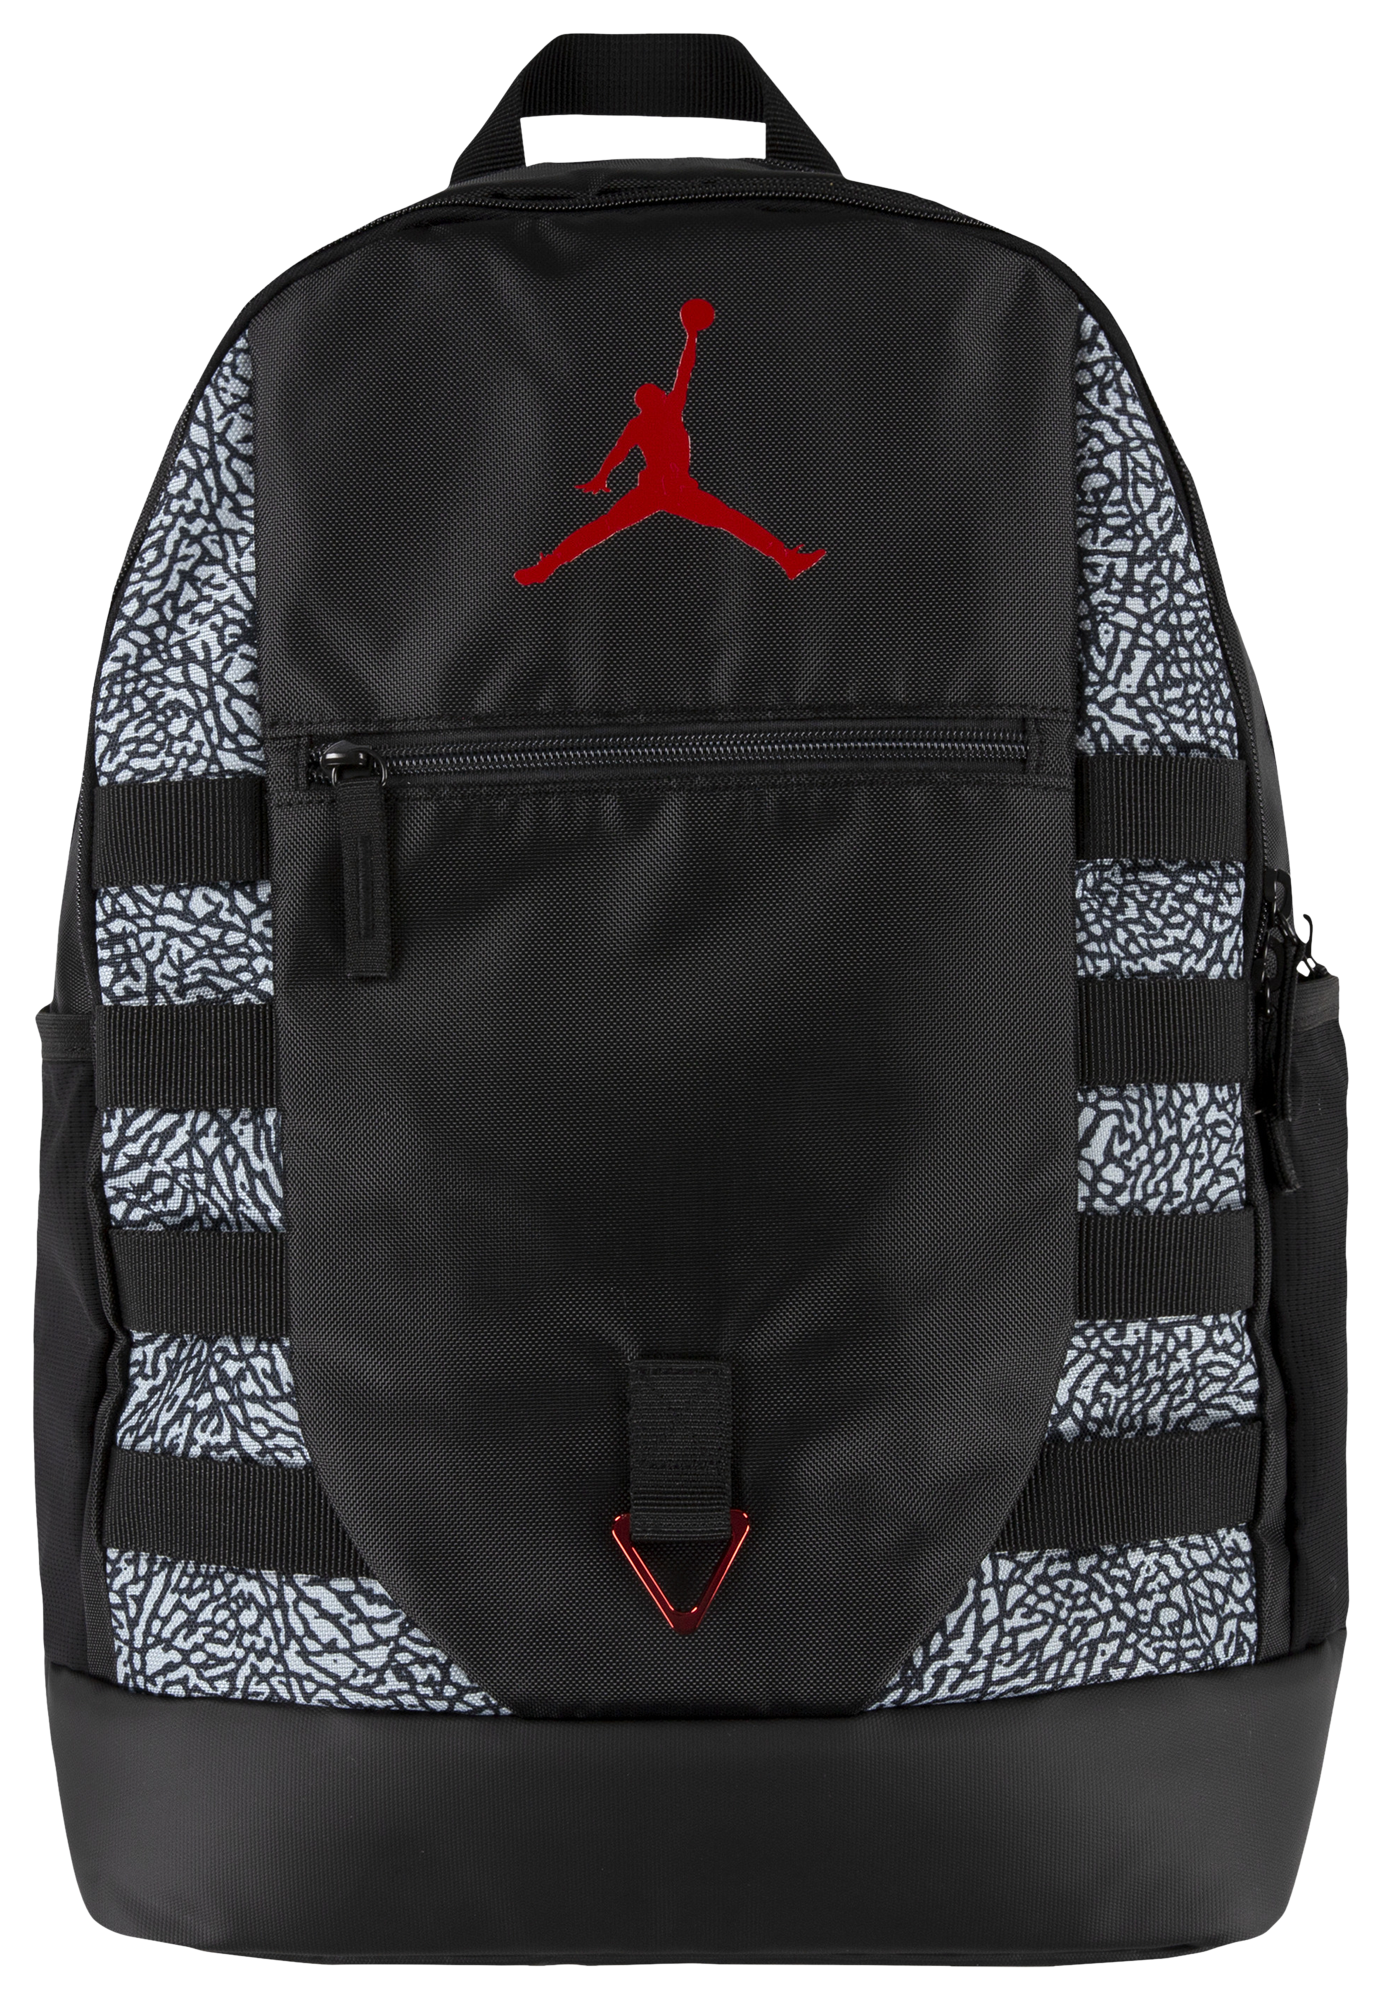 Jordan Backpack | Foot Locker